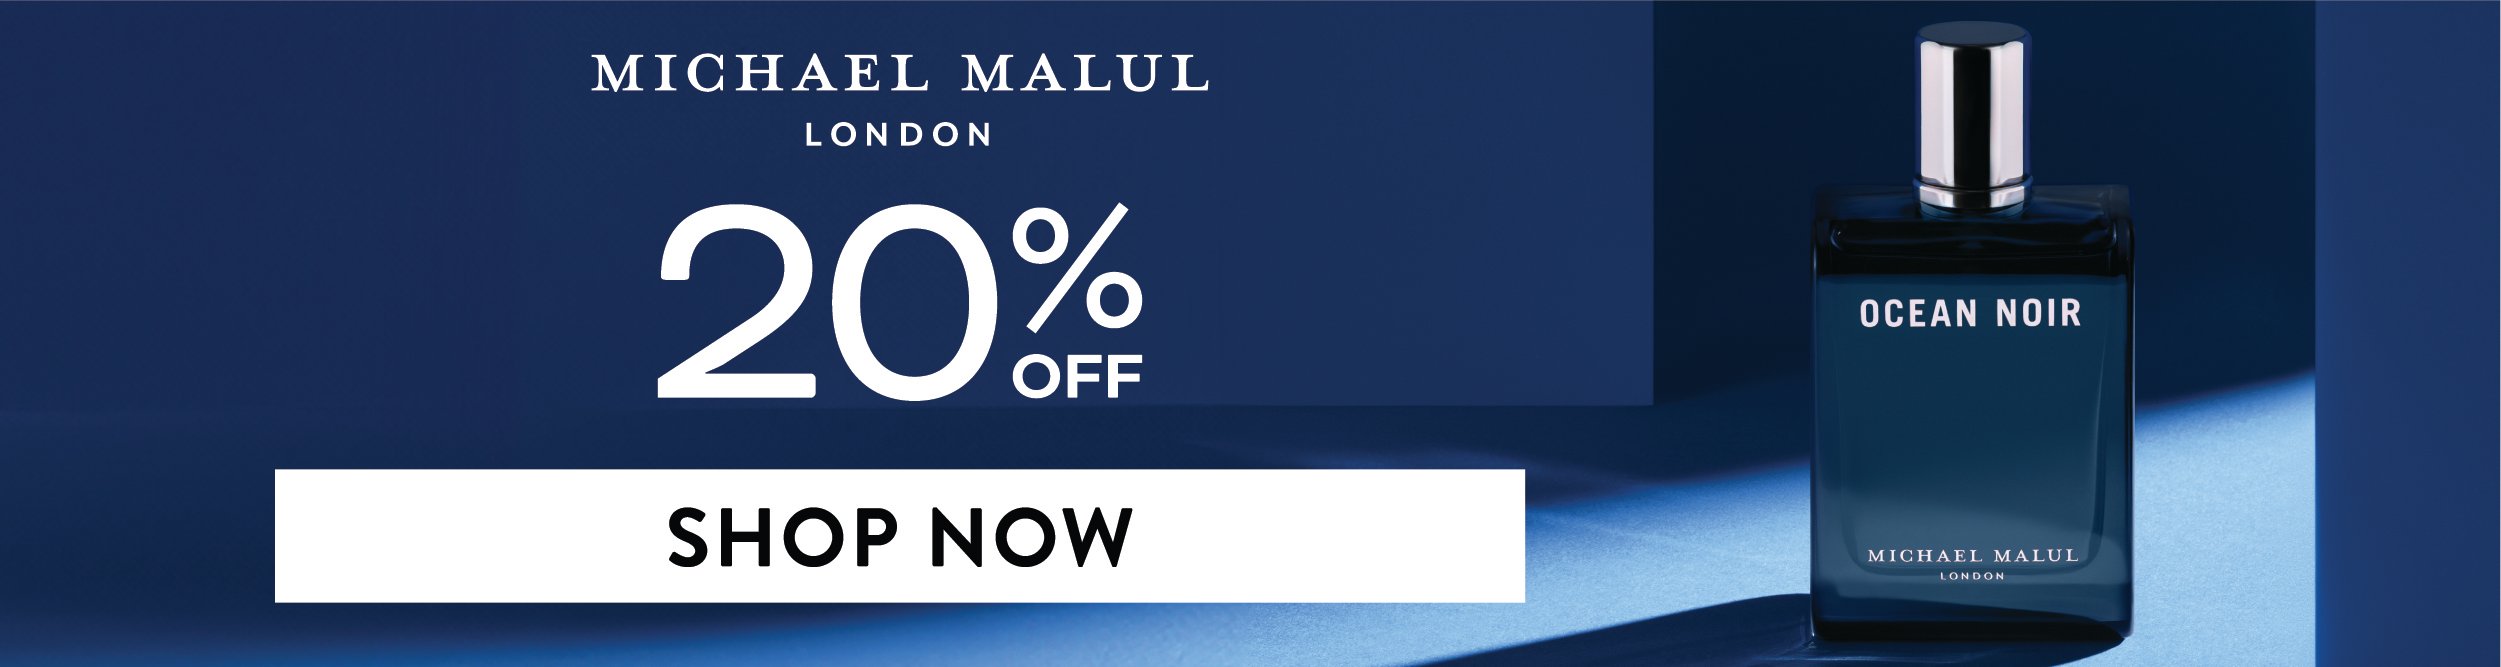 Michael Malul London, 20% off, shop now